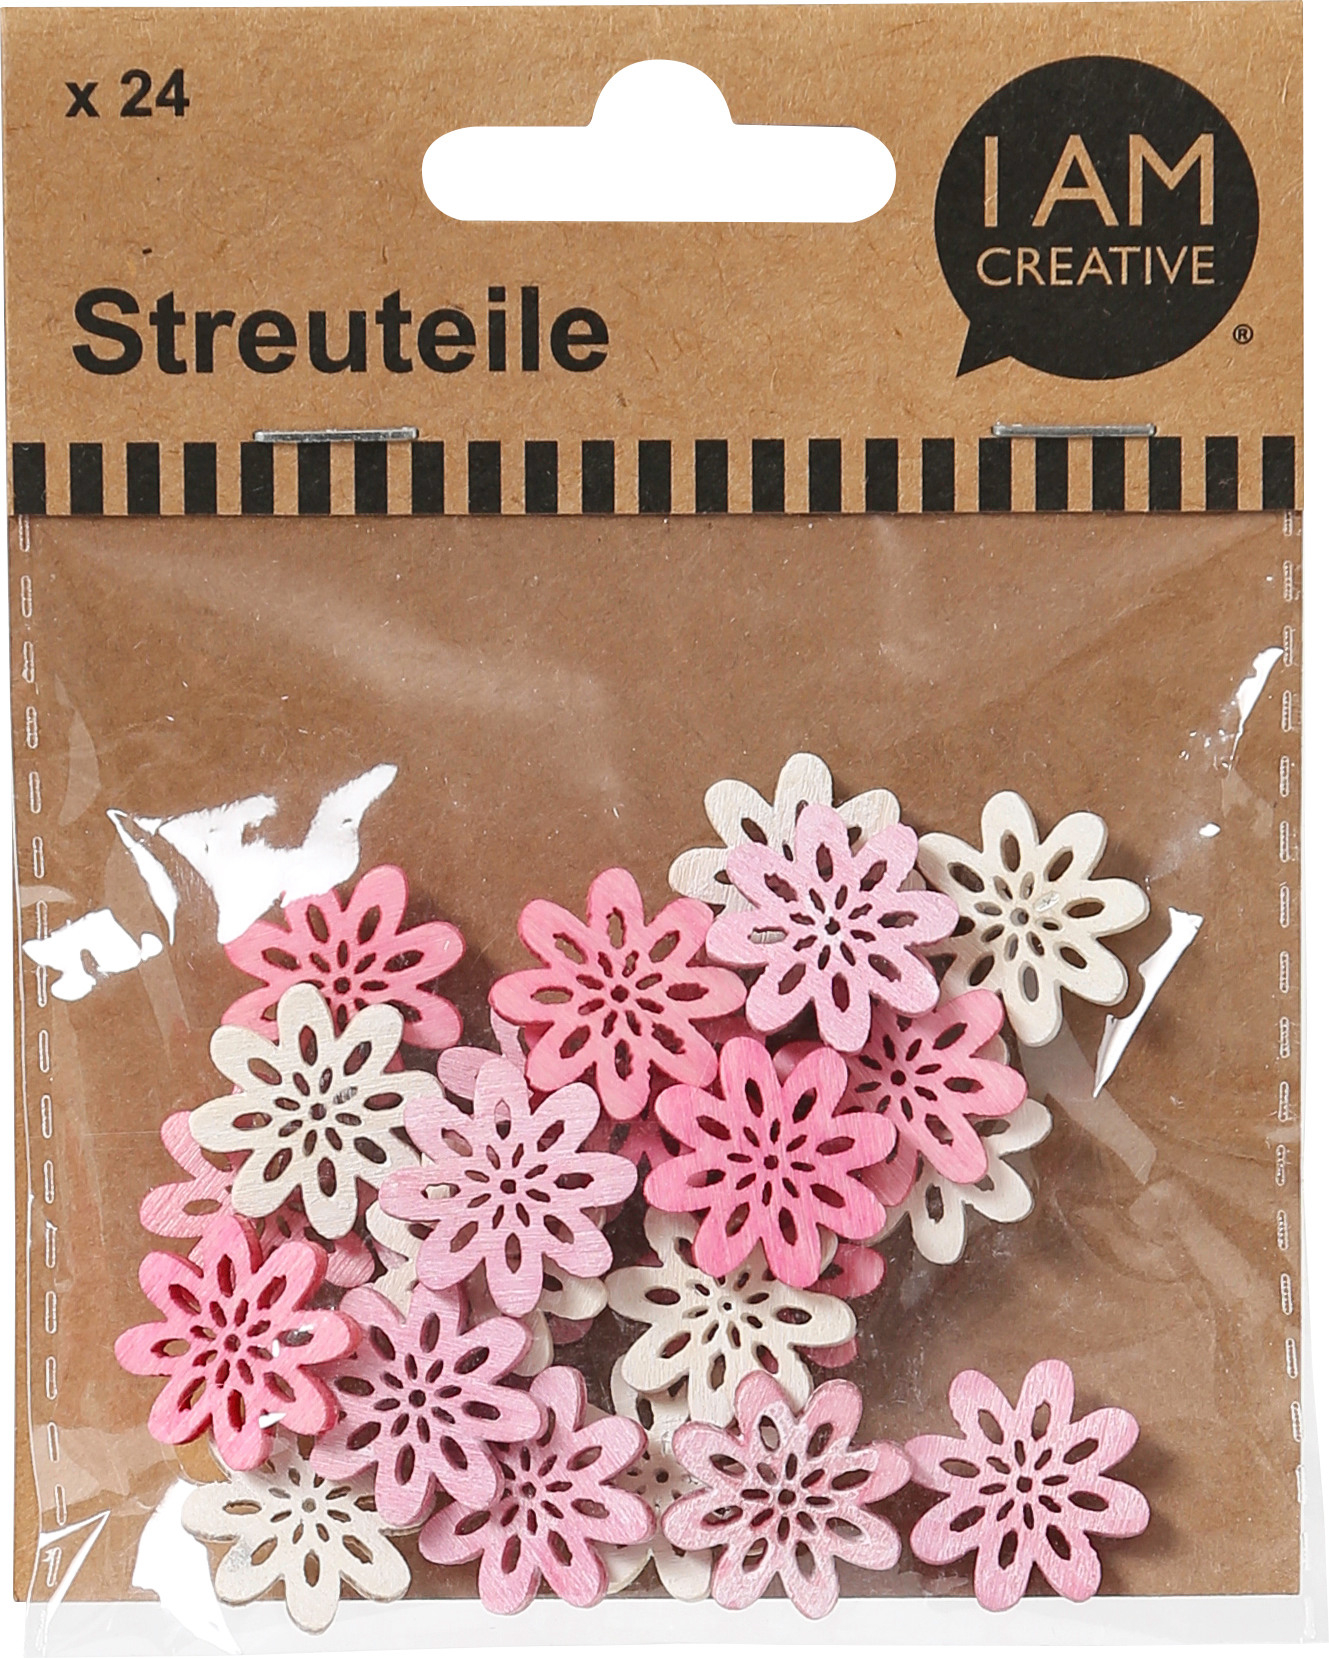 I AM CREATIVE Streuteile Blume MAA4501.86 III, bunt, 24 Stück